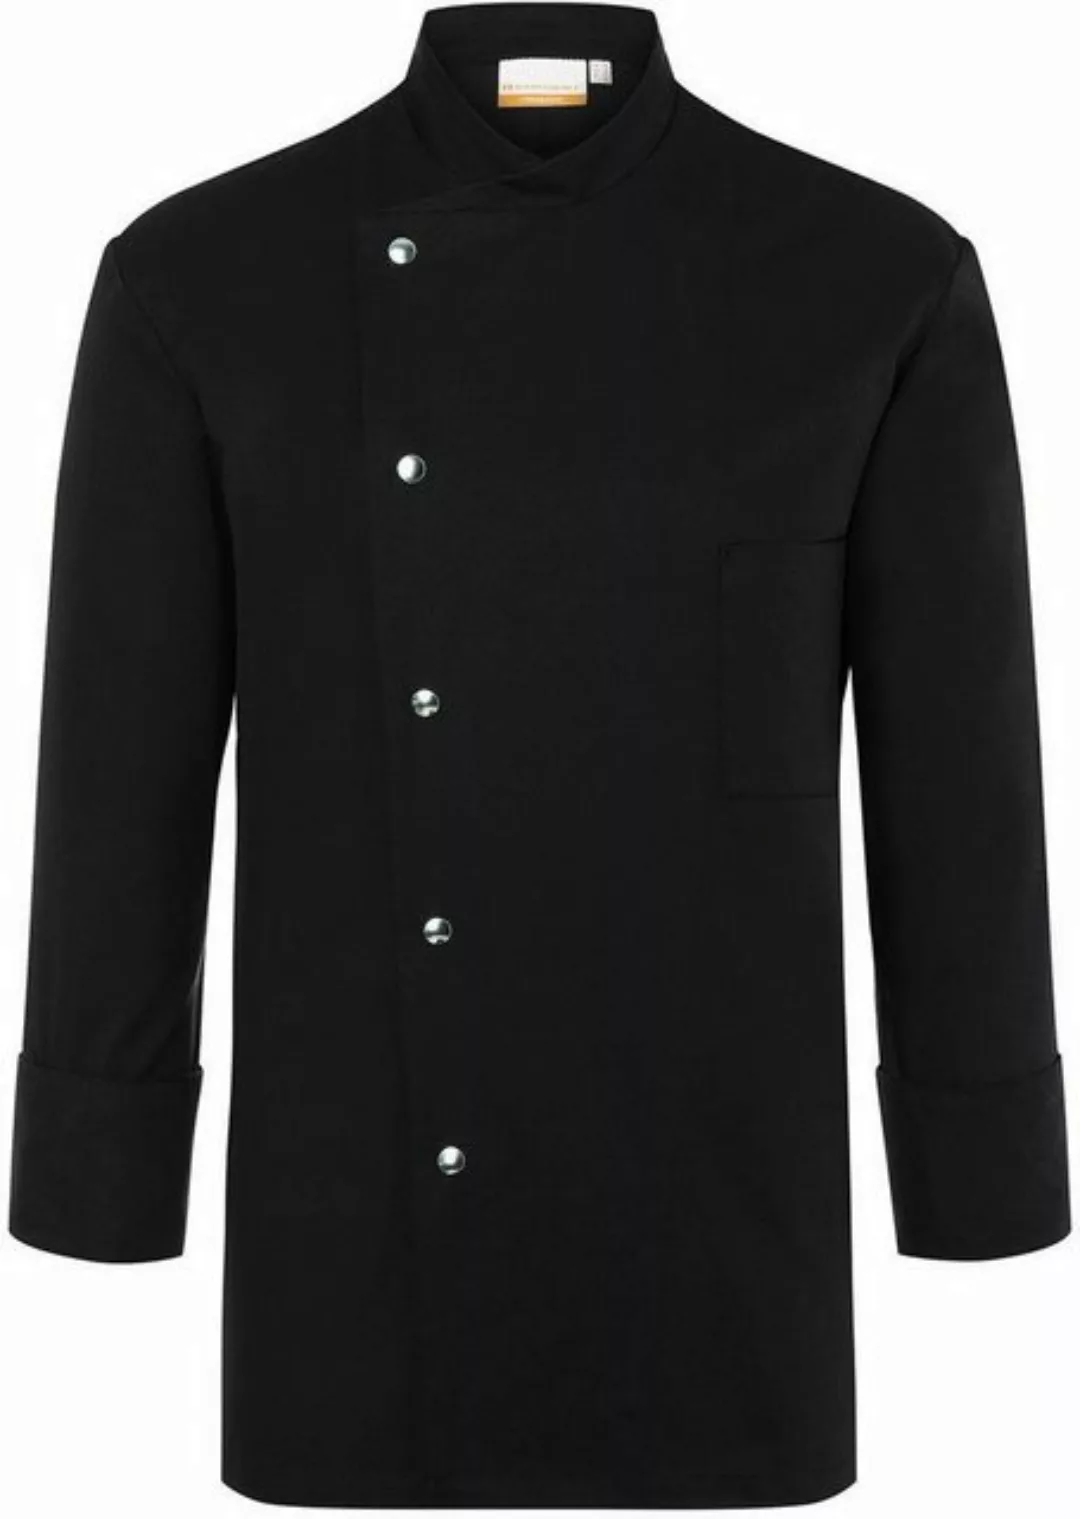 Karlowsky Fashion Kochjacke Chef Jacket Lars Long Sleeve Waschbar bis 95°C günstig online kaufen